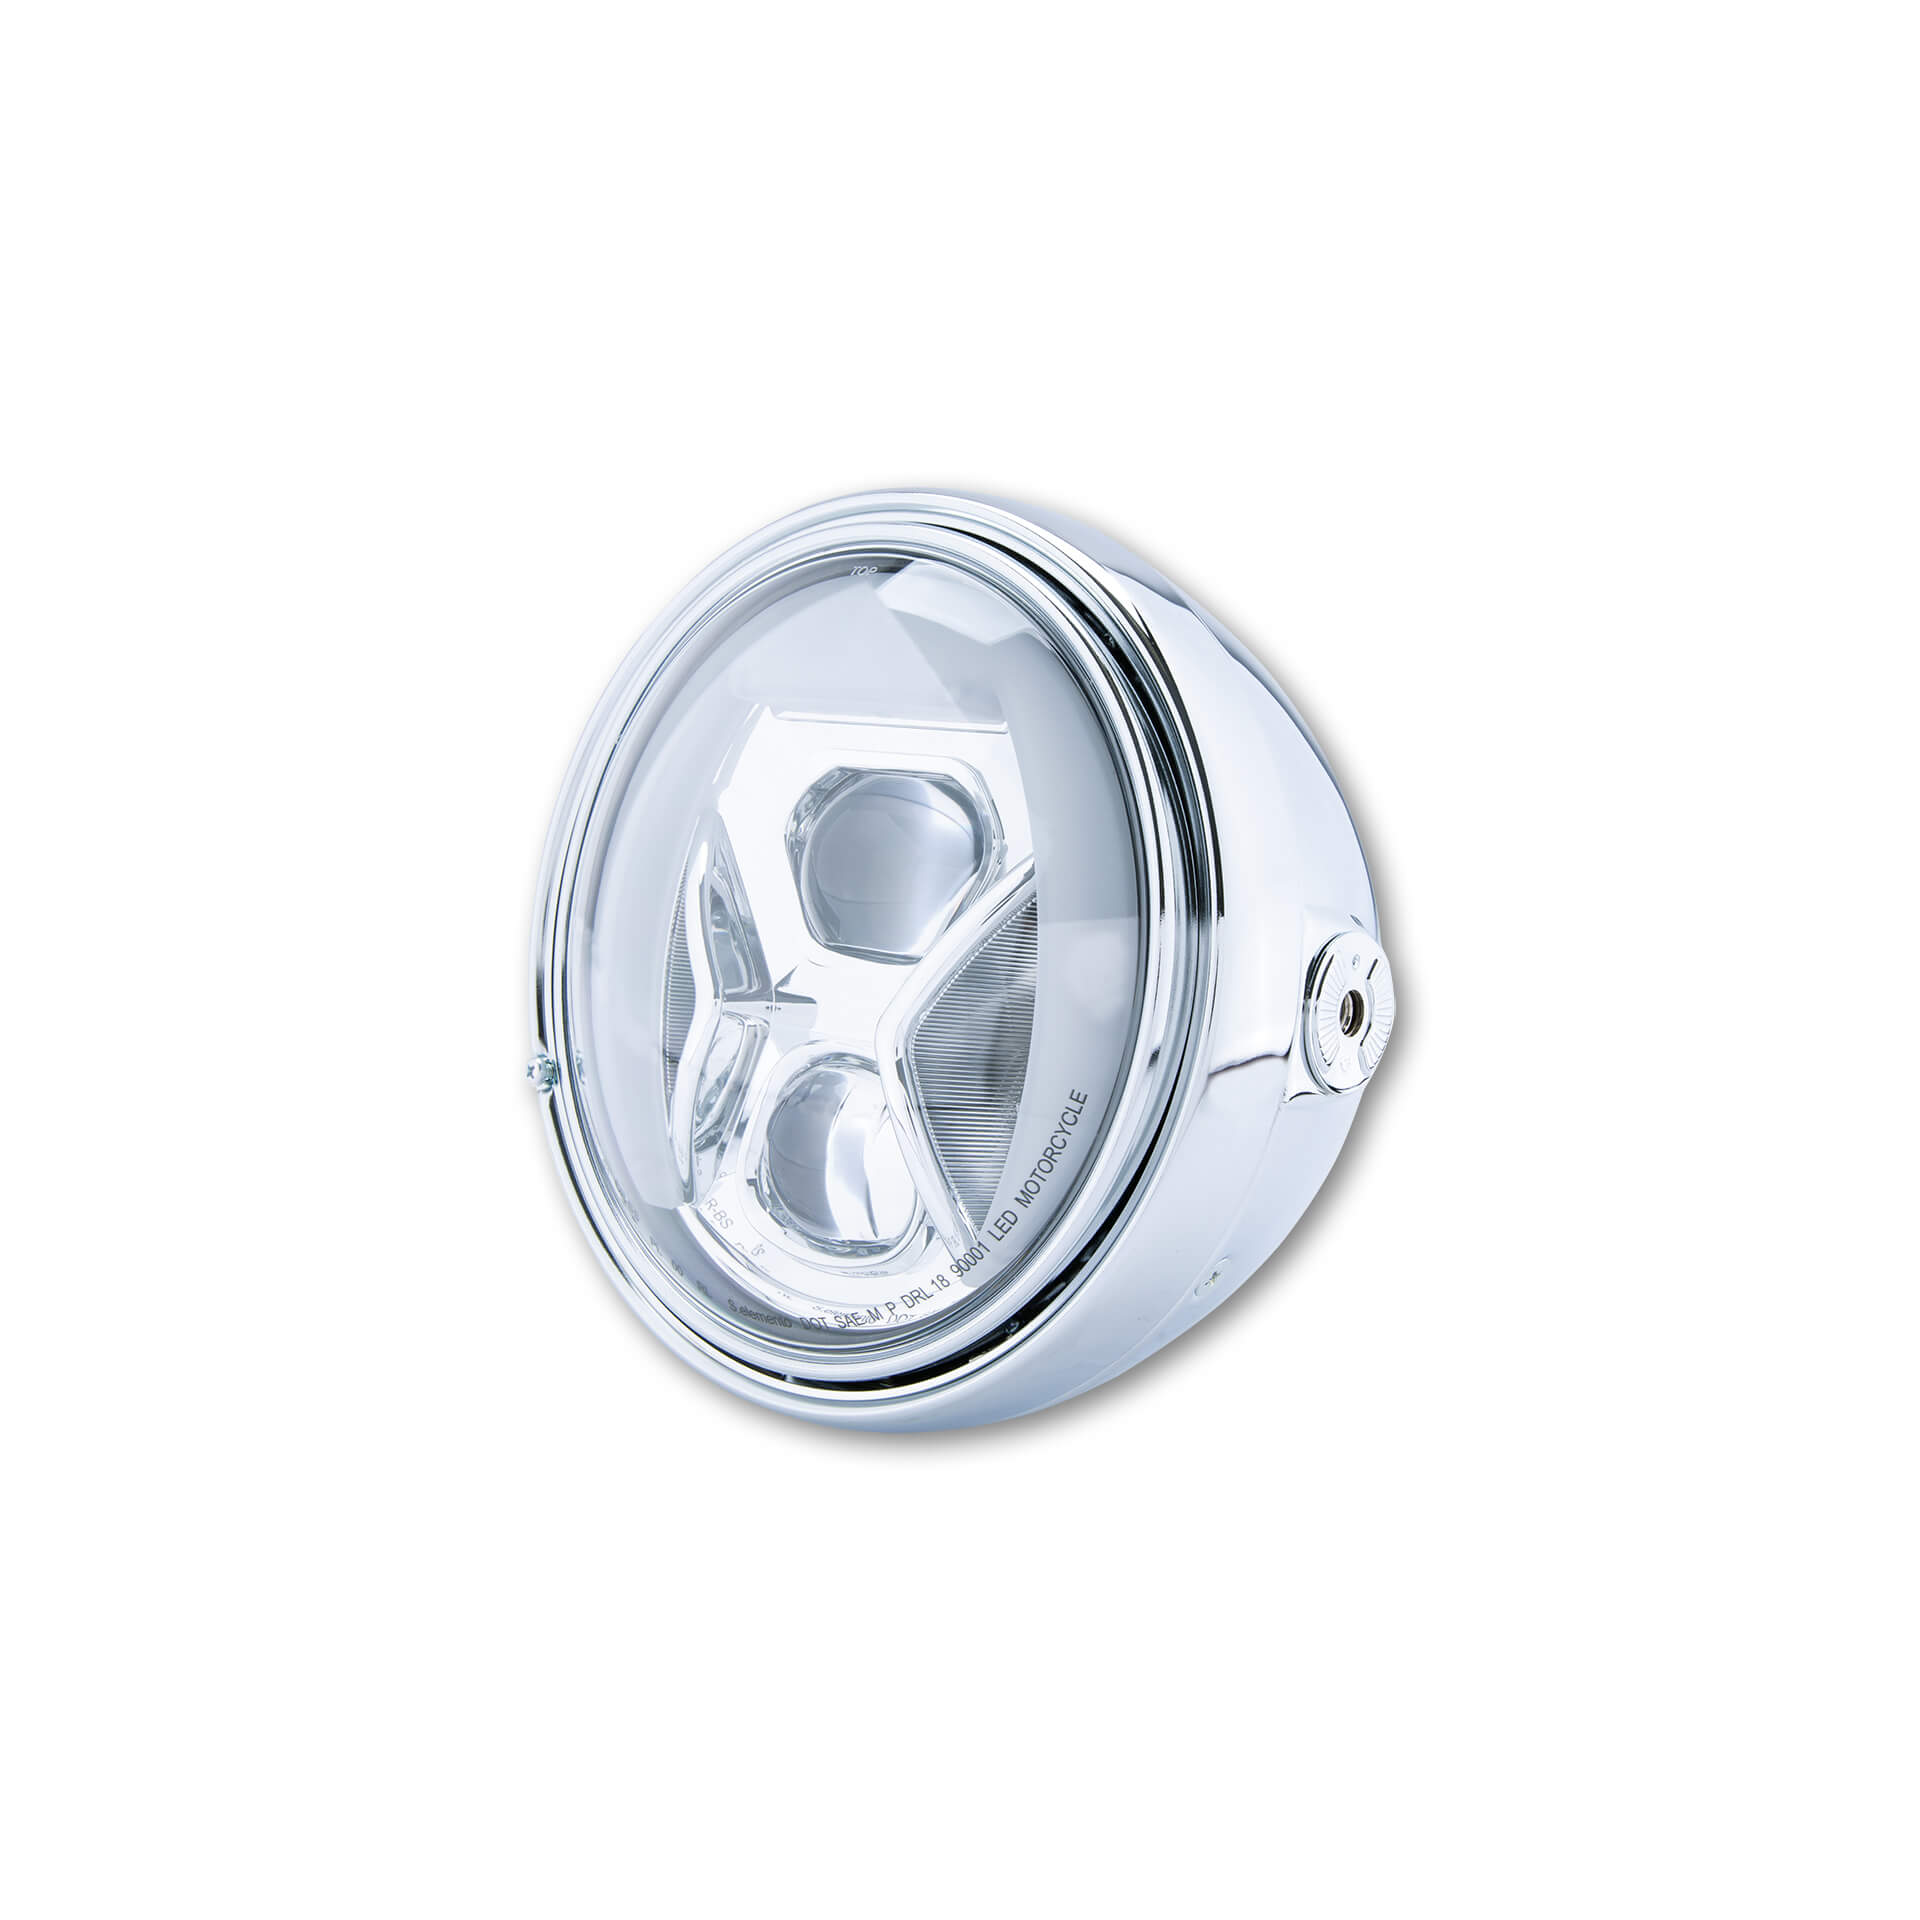 highsider 7 inch LED headlight SANTA FE TYP 8 with TFL, bend lighting